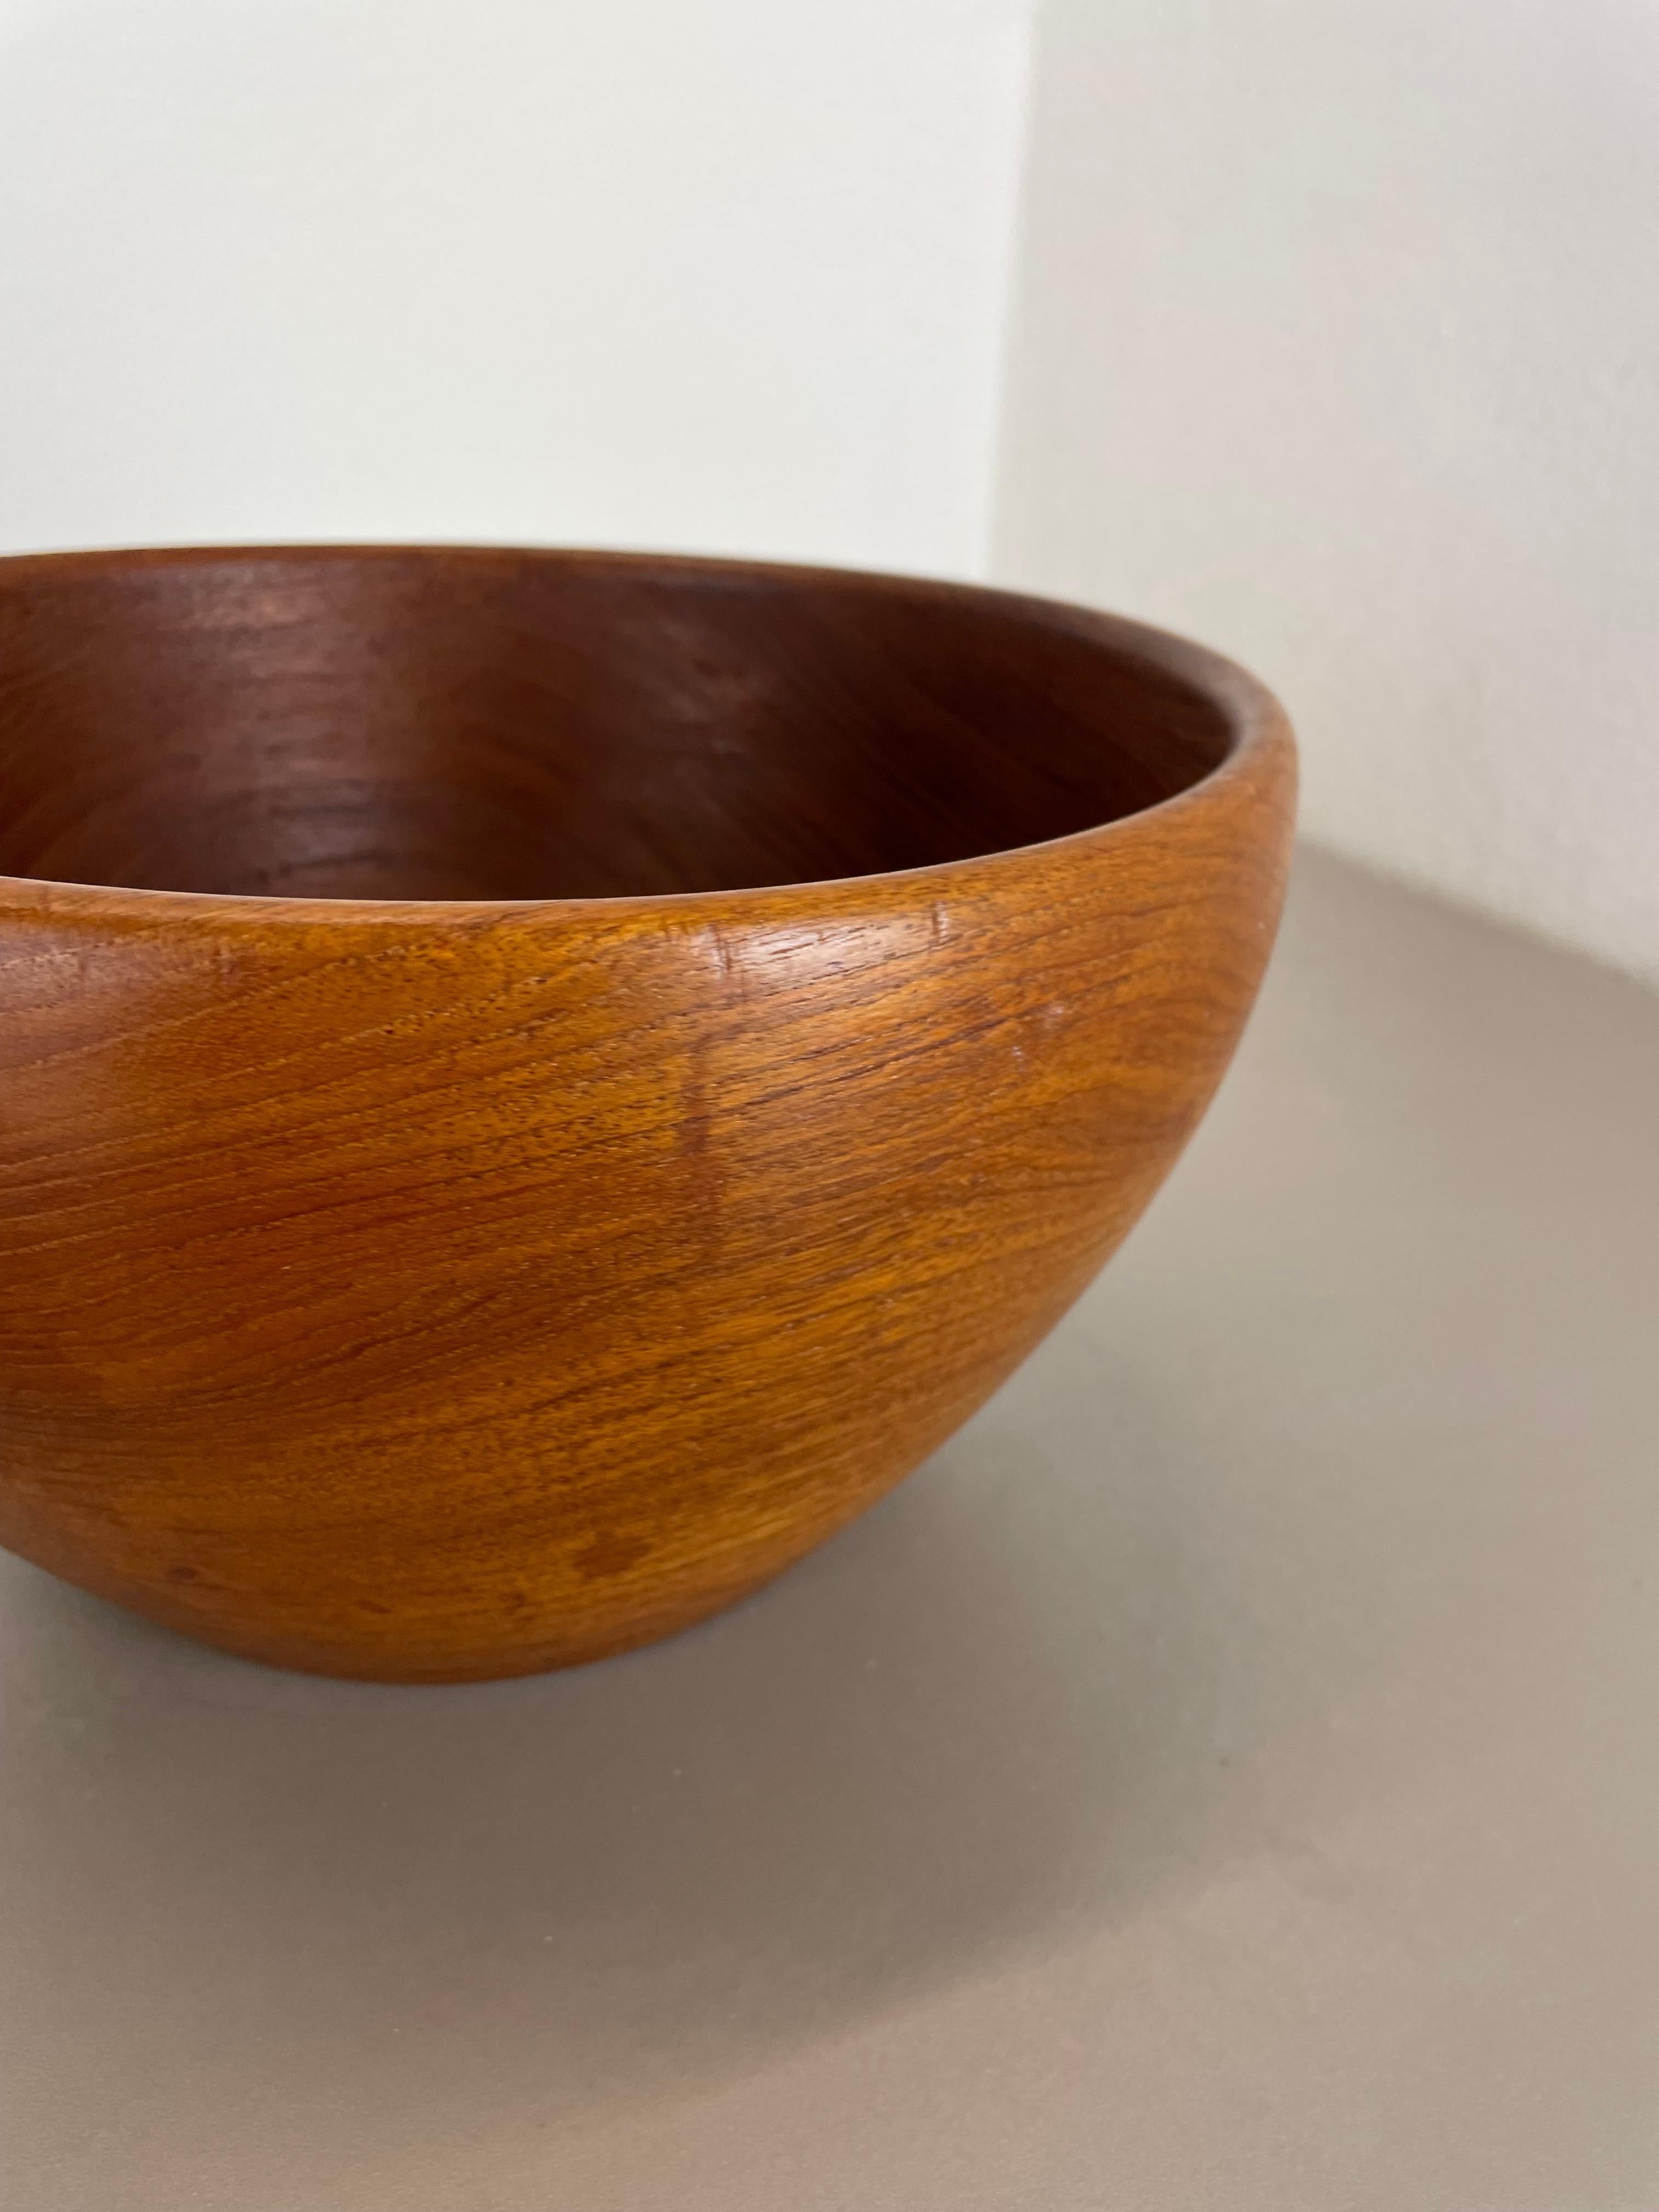 Extra Large Original Vintage Shell Bowl in Solid Teak Wood, Austria, 1970s For Sale 5